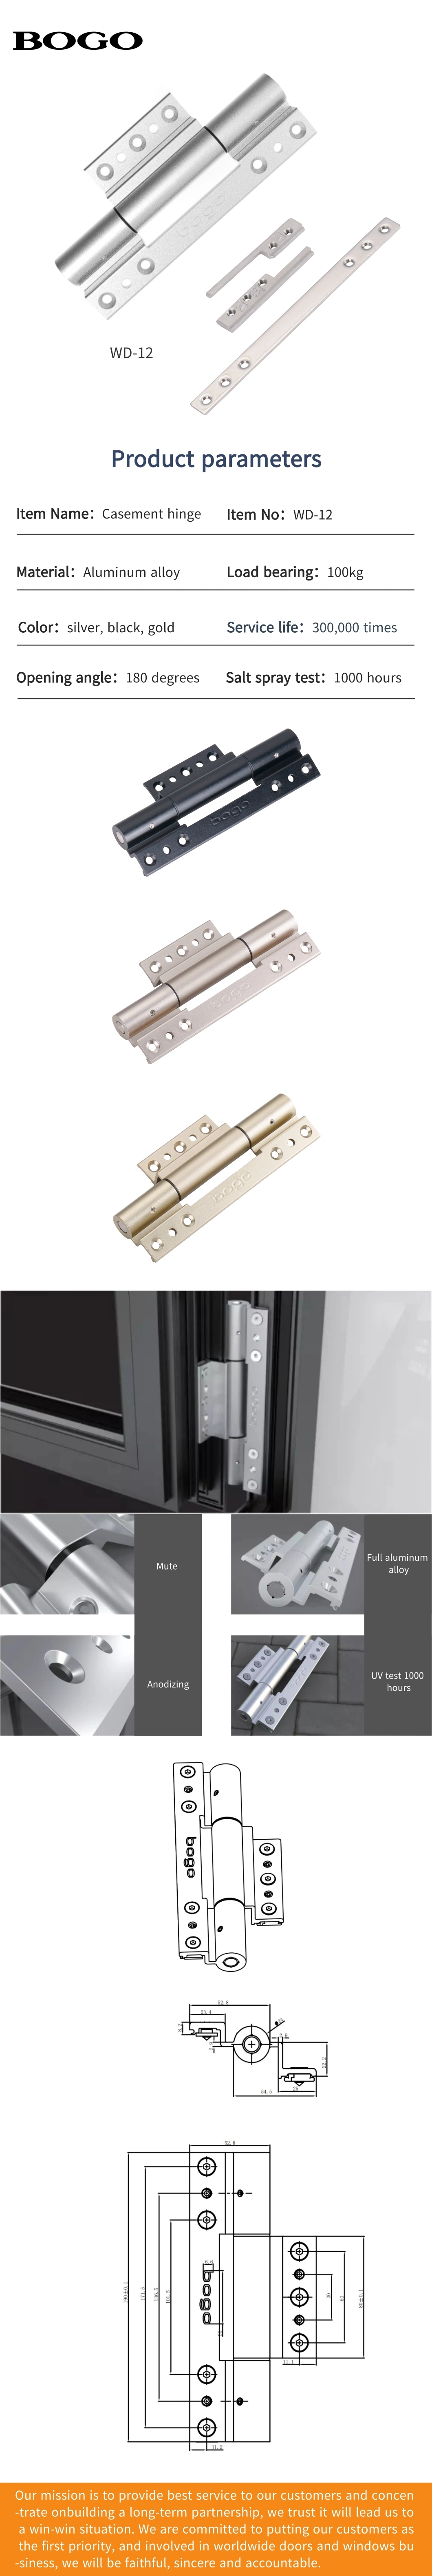 Bogo Foshan Manufacturer High Quality Door and Window Aluminium Anodizing Finish C Groove Hinge